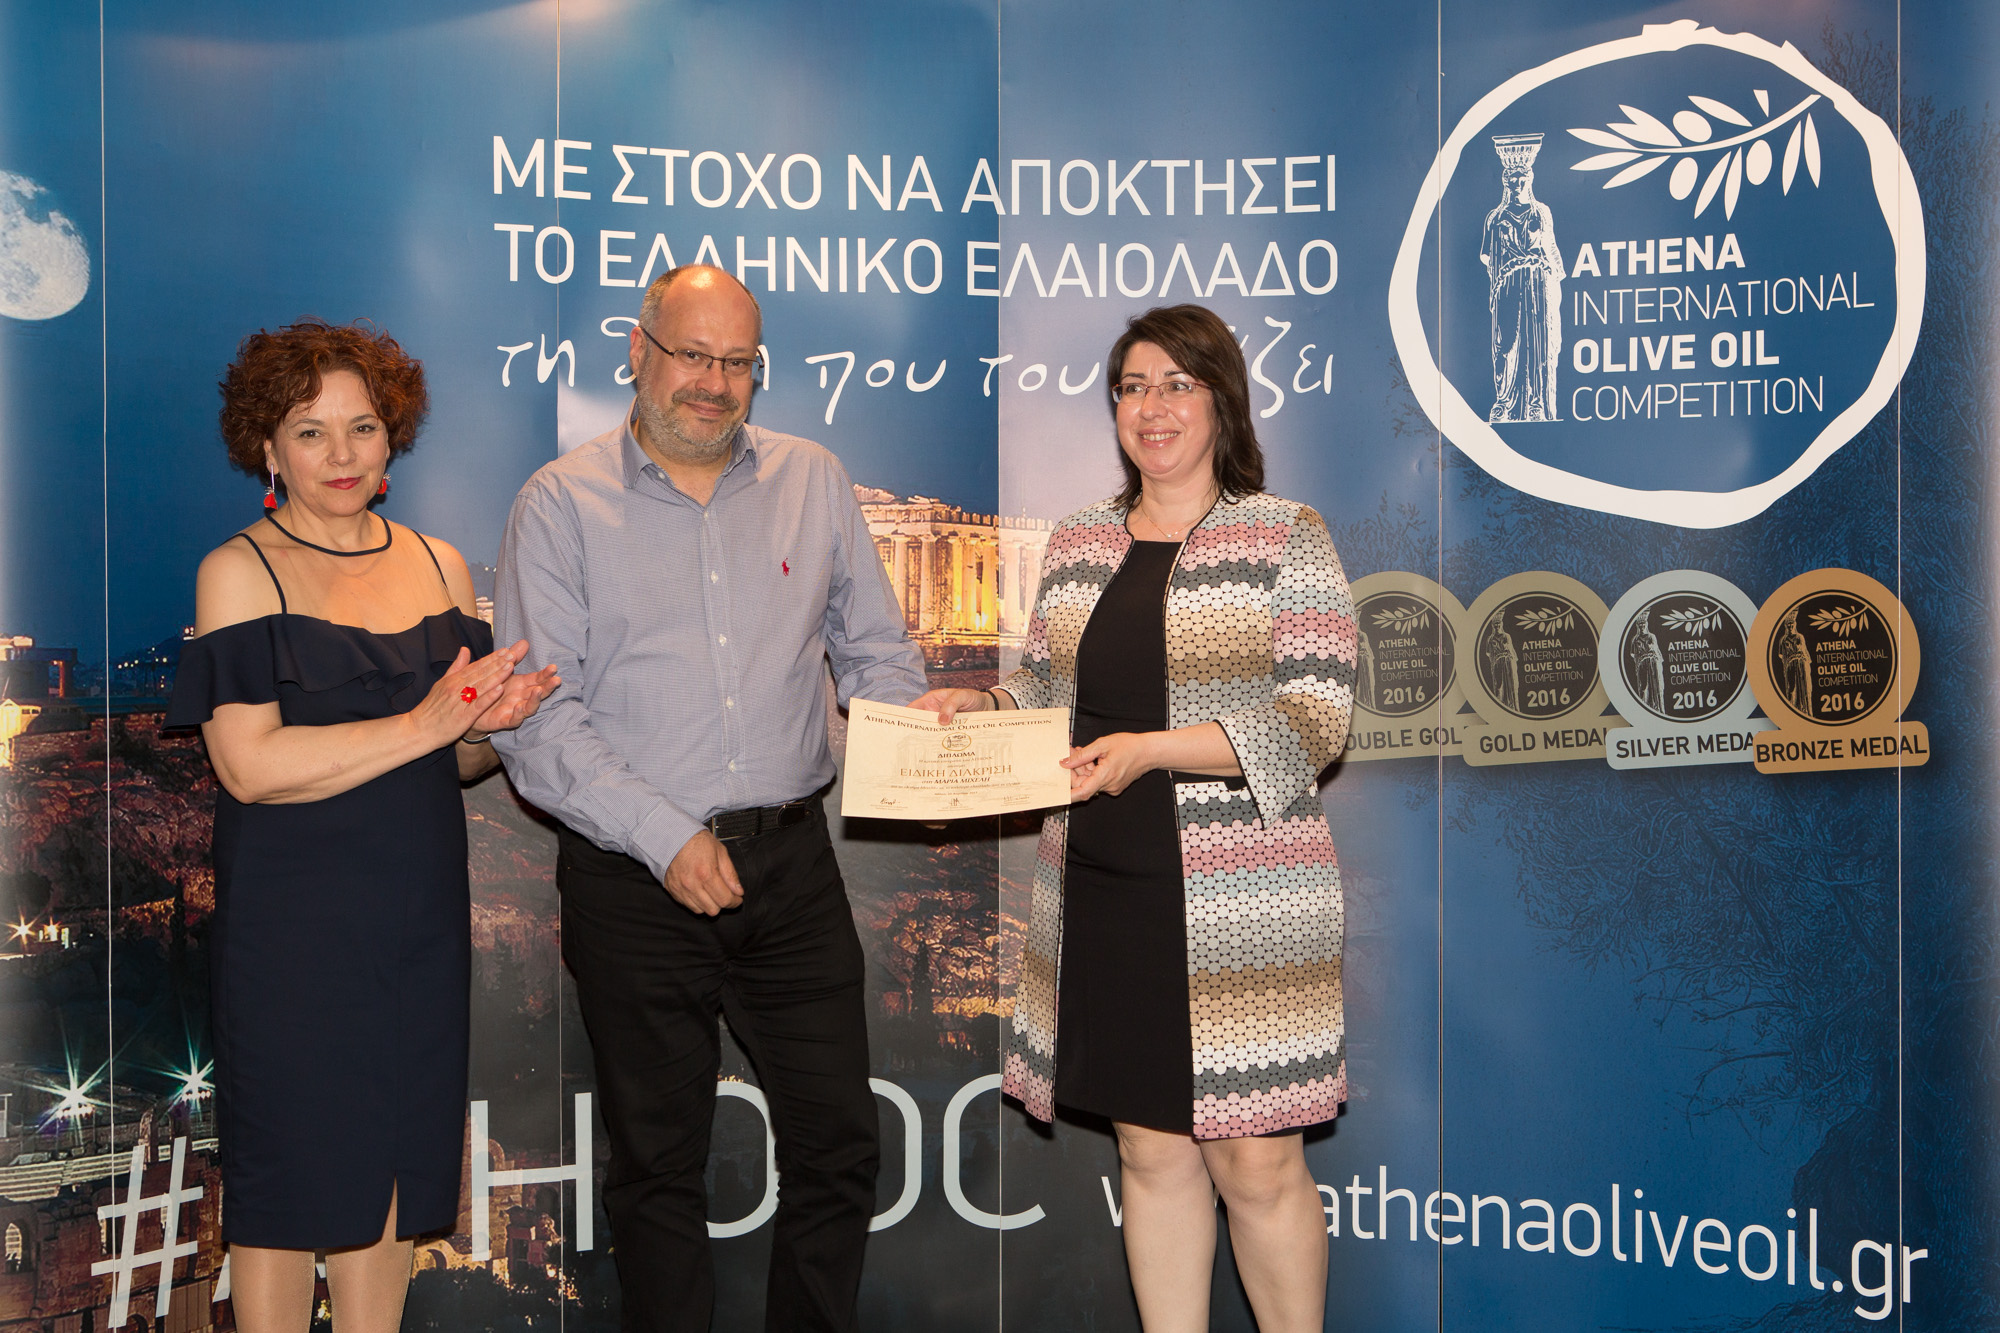 ATHIOOC 2017 Award Ceremony 2017